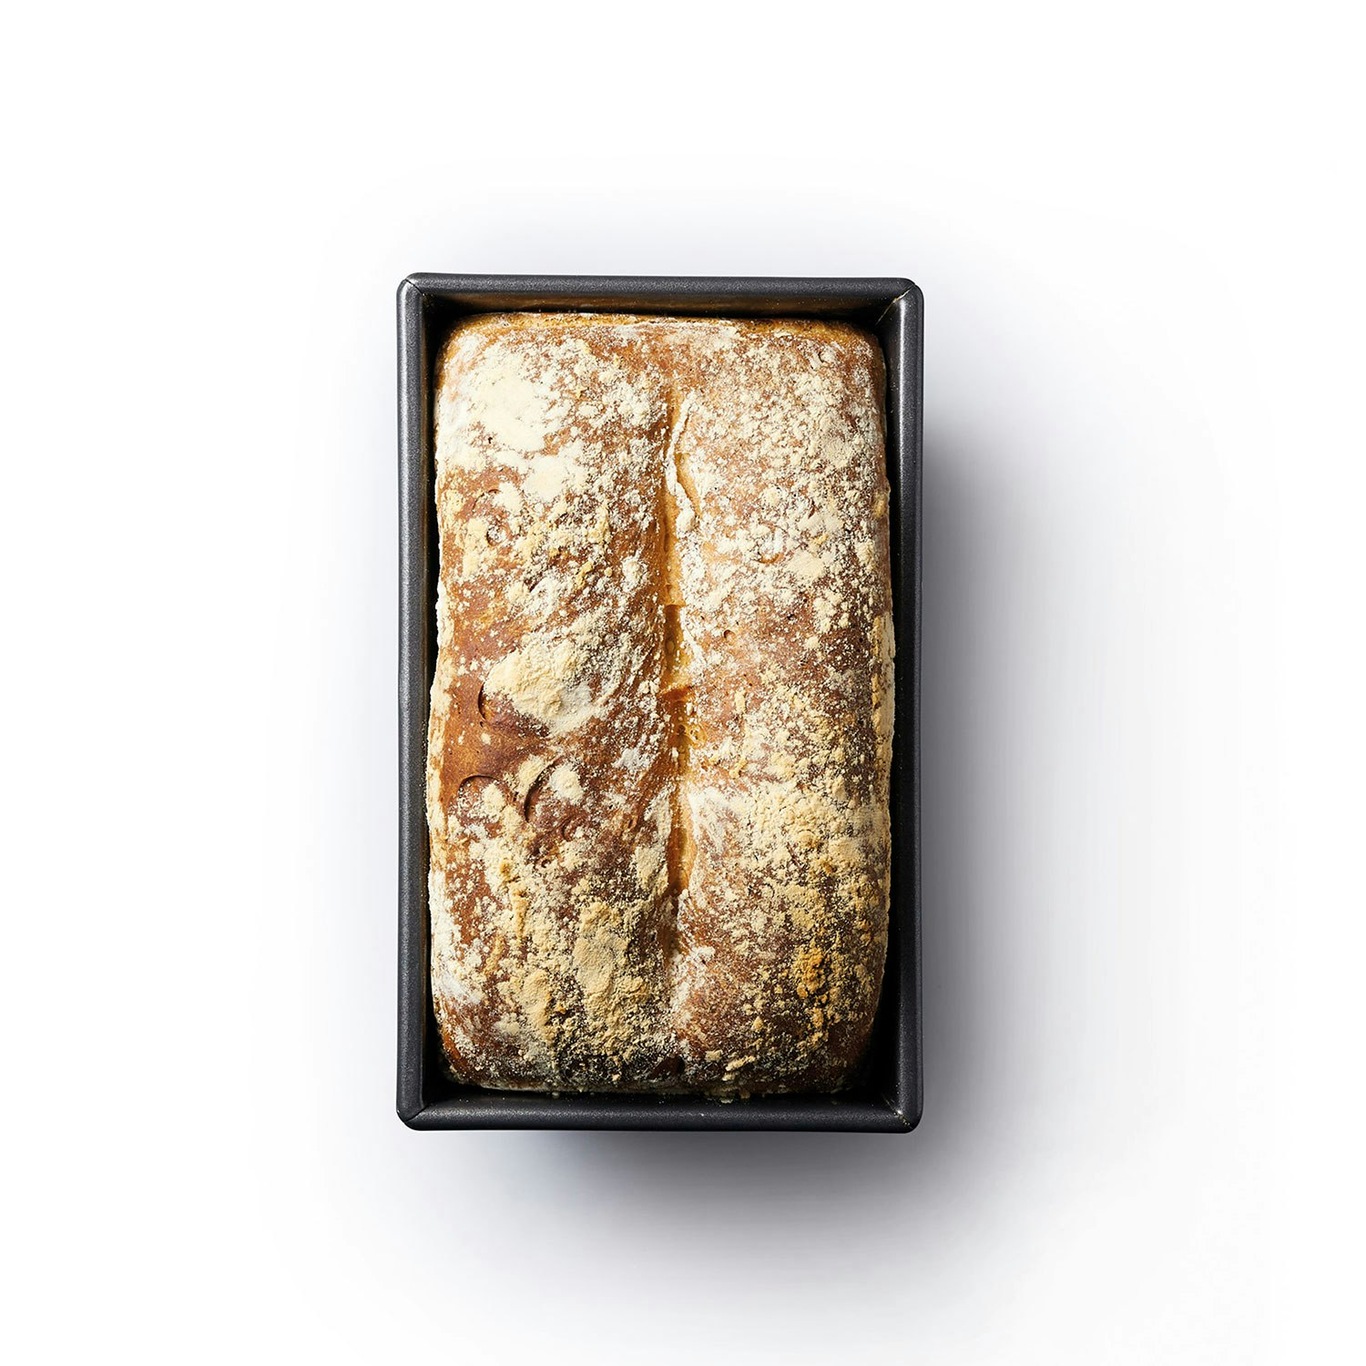 MasterClass Non-Stick 2lb Loaf Pan - Kitchen Craft @ RoyalDesign